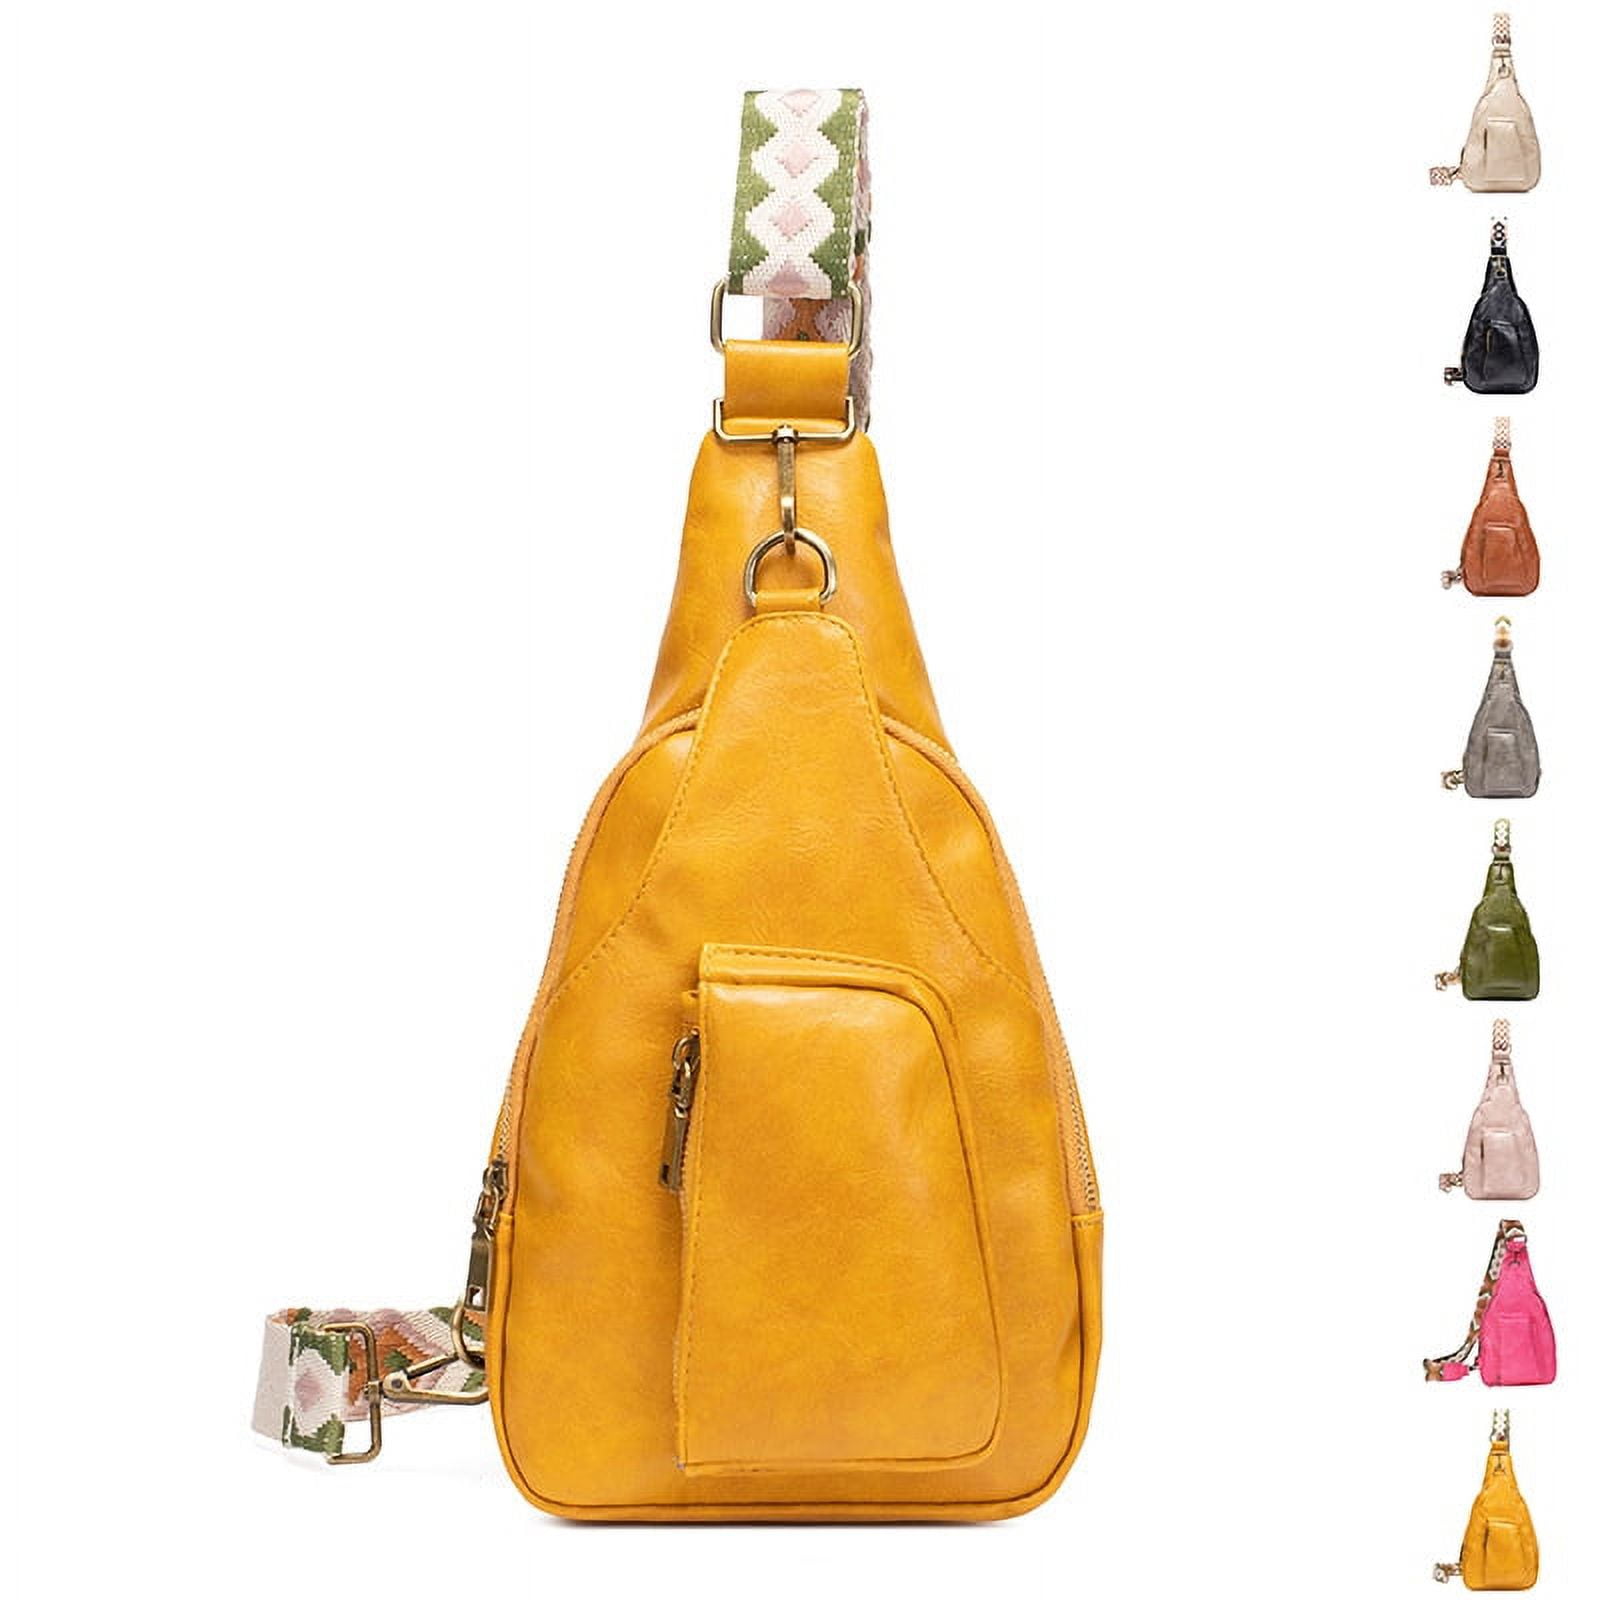 Women's Bags | Multi brand bags on Shopbvono